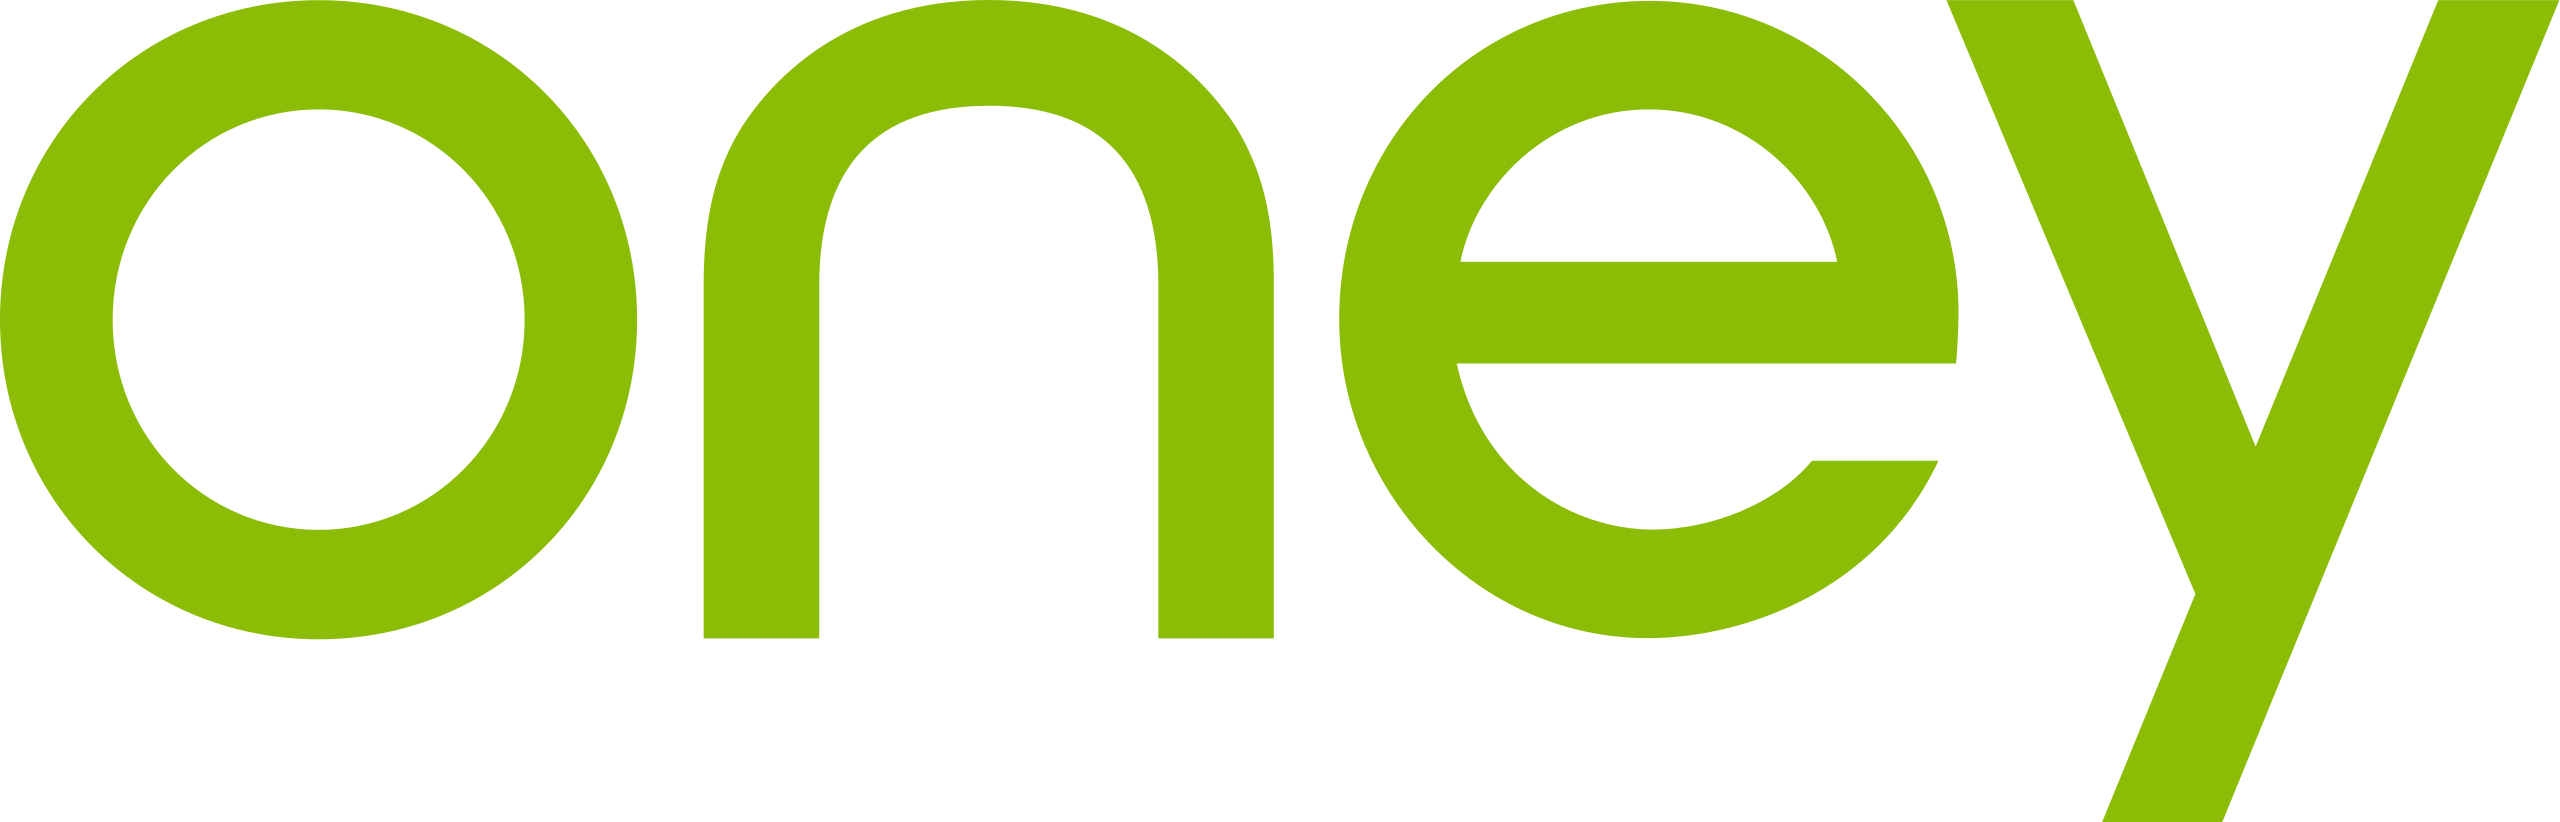 File:Logo Oney.svg - Wikimedia Commons